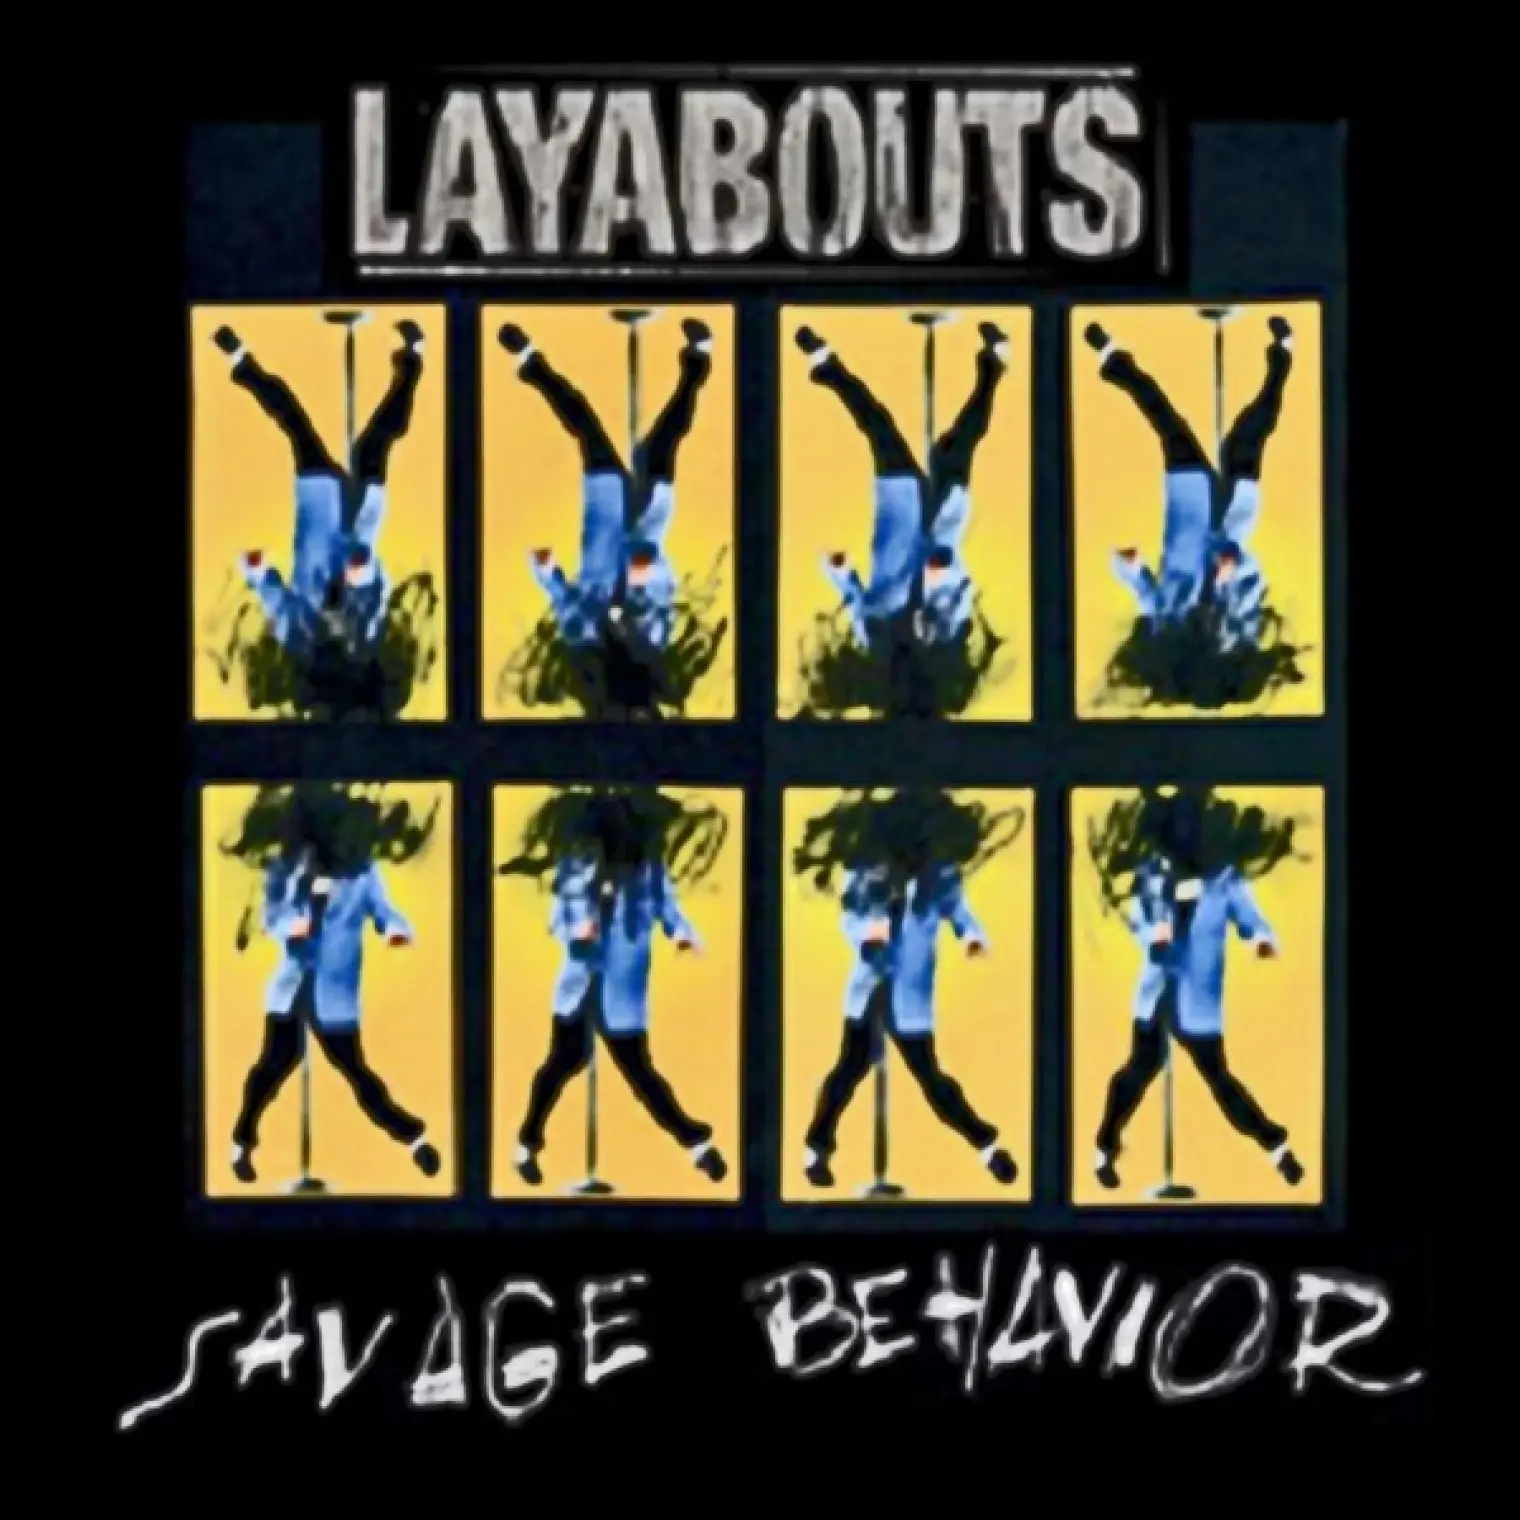 Savage Behavior -  Layabouts 